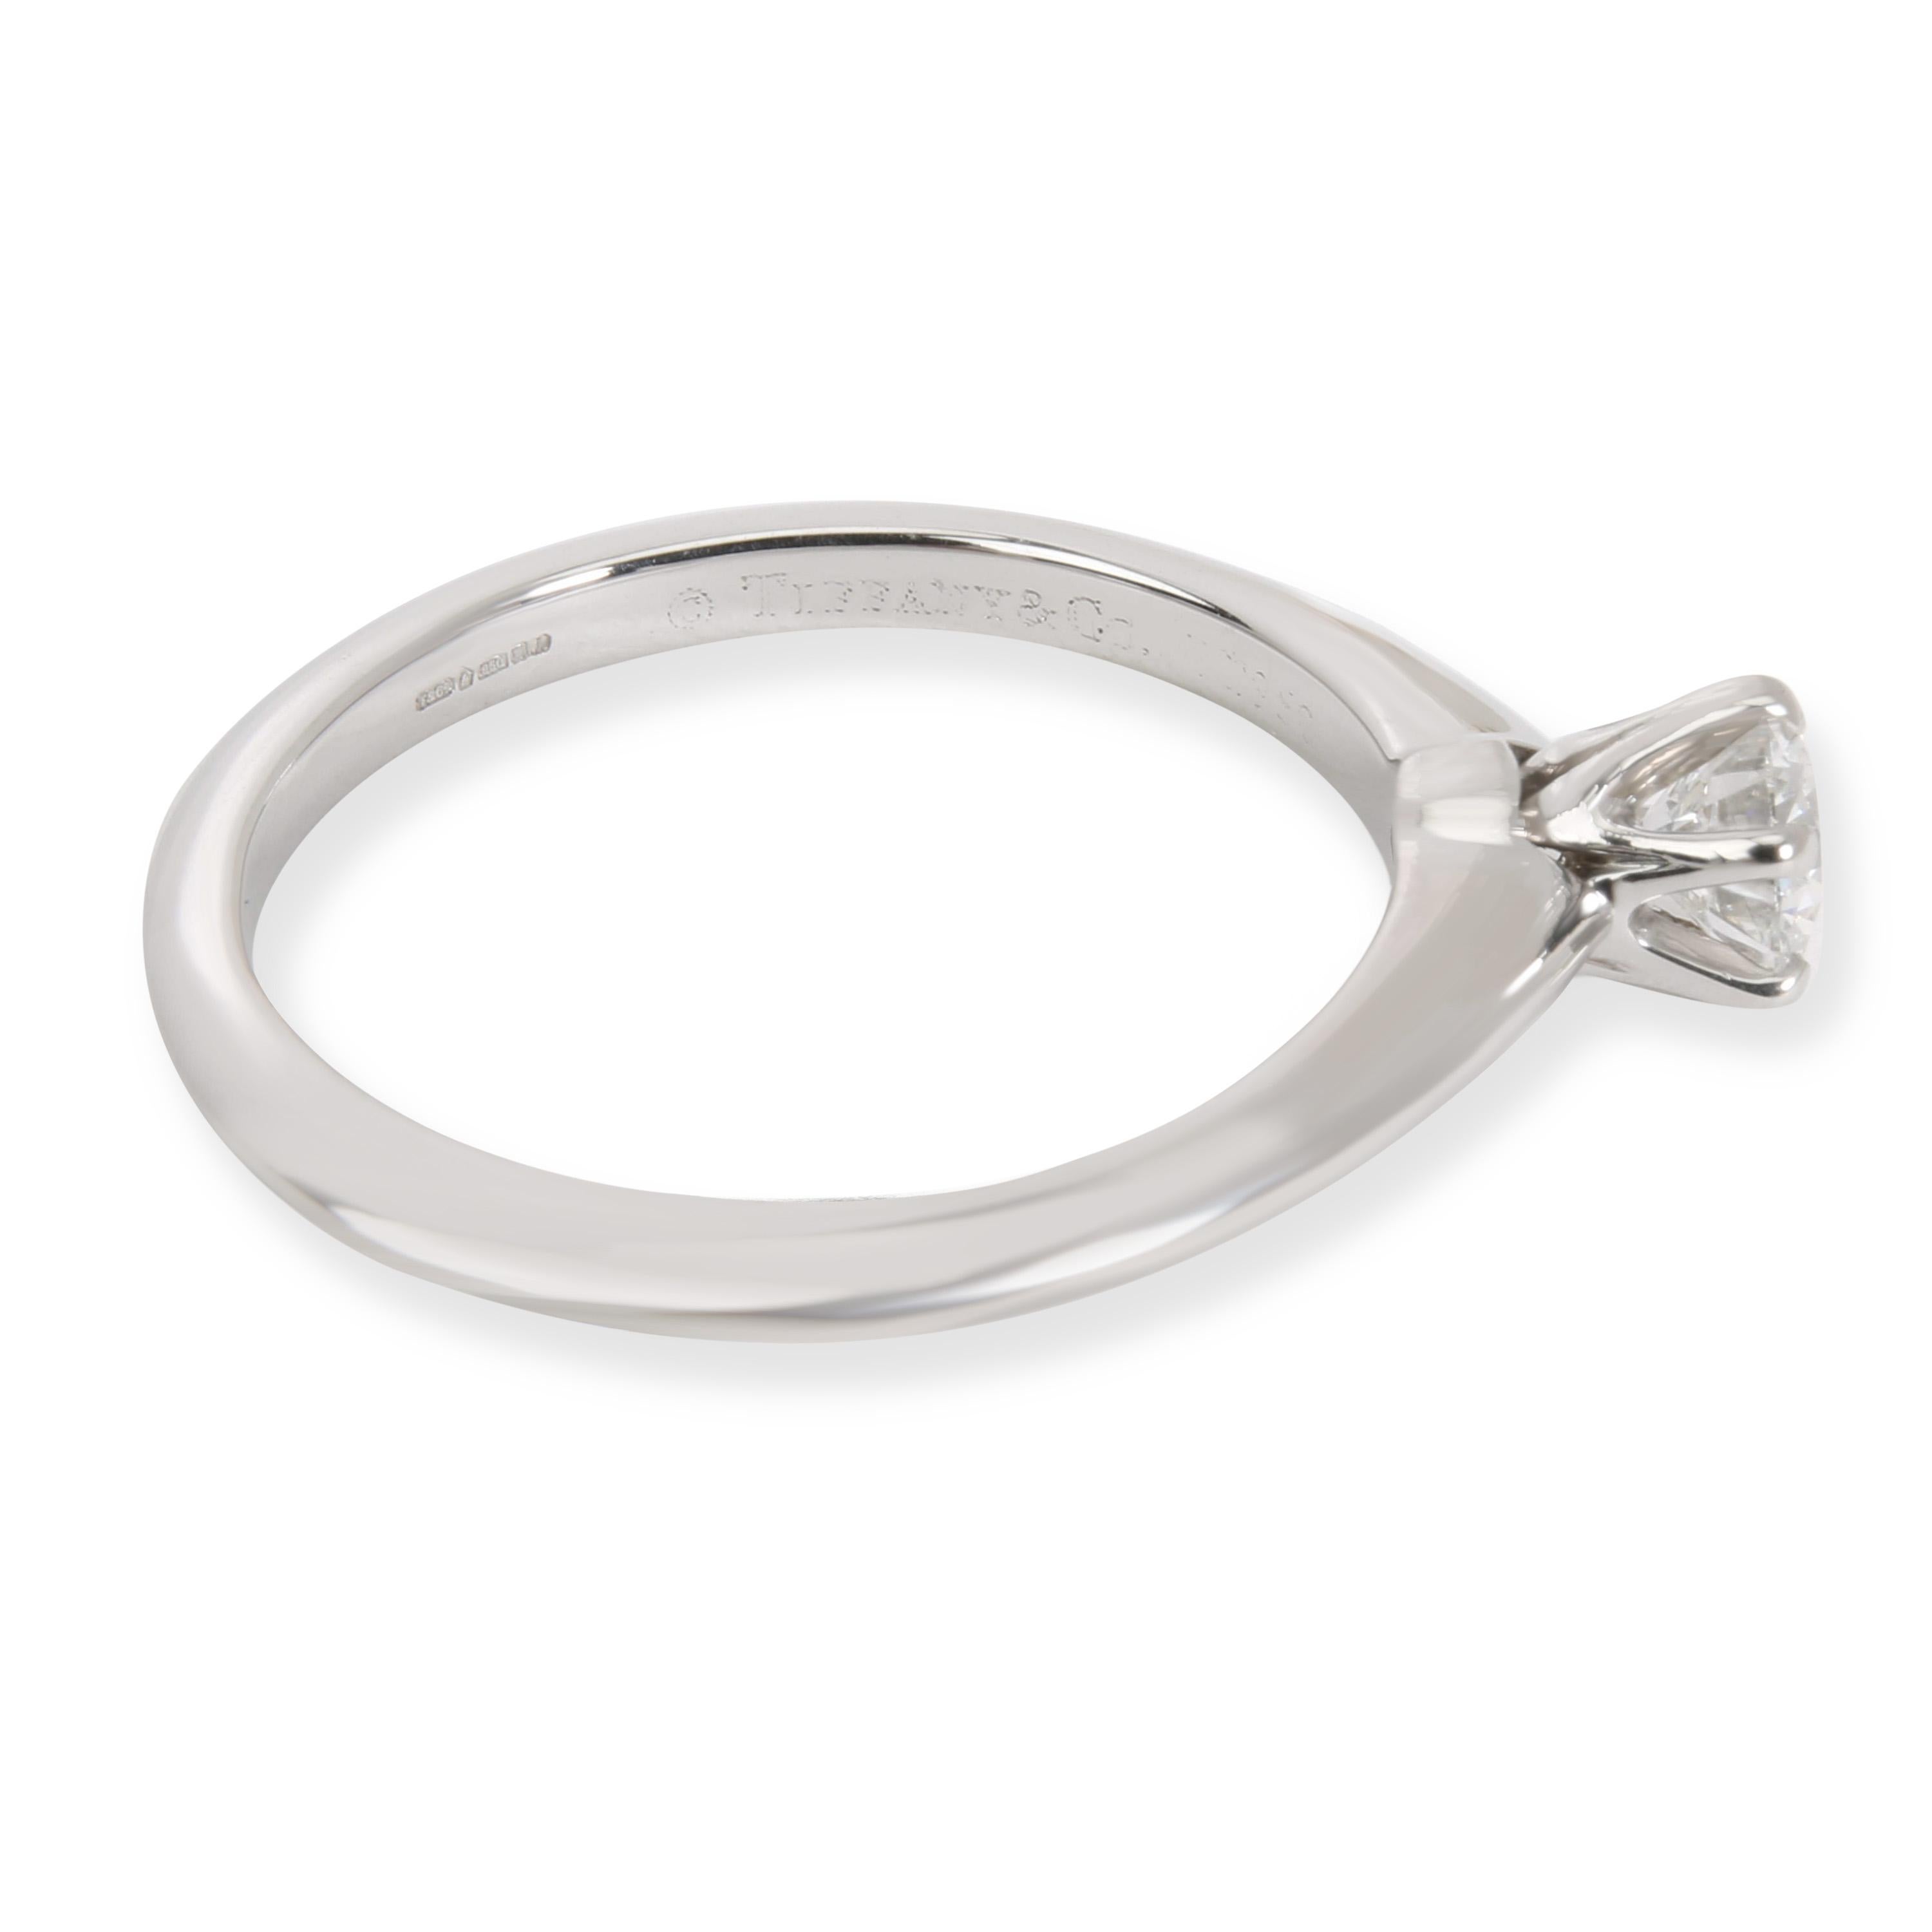 Round Cut Tiffany & Co. Solitaire Diamond Engagement Ring in Platinum '0.79 Carat I/VVS2'